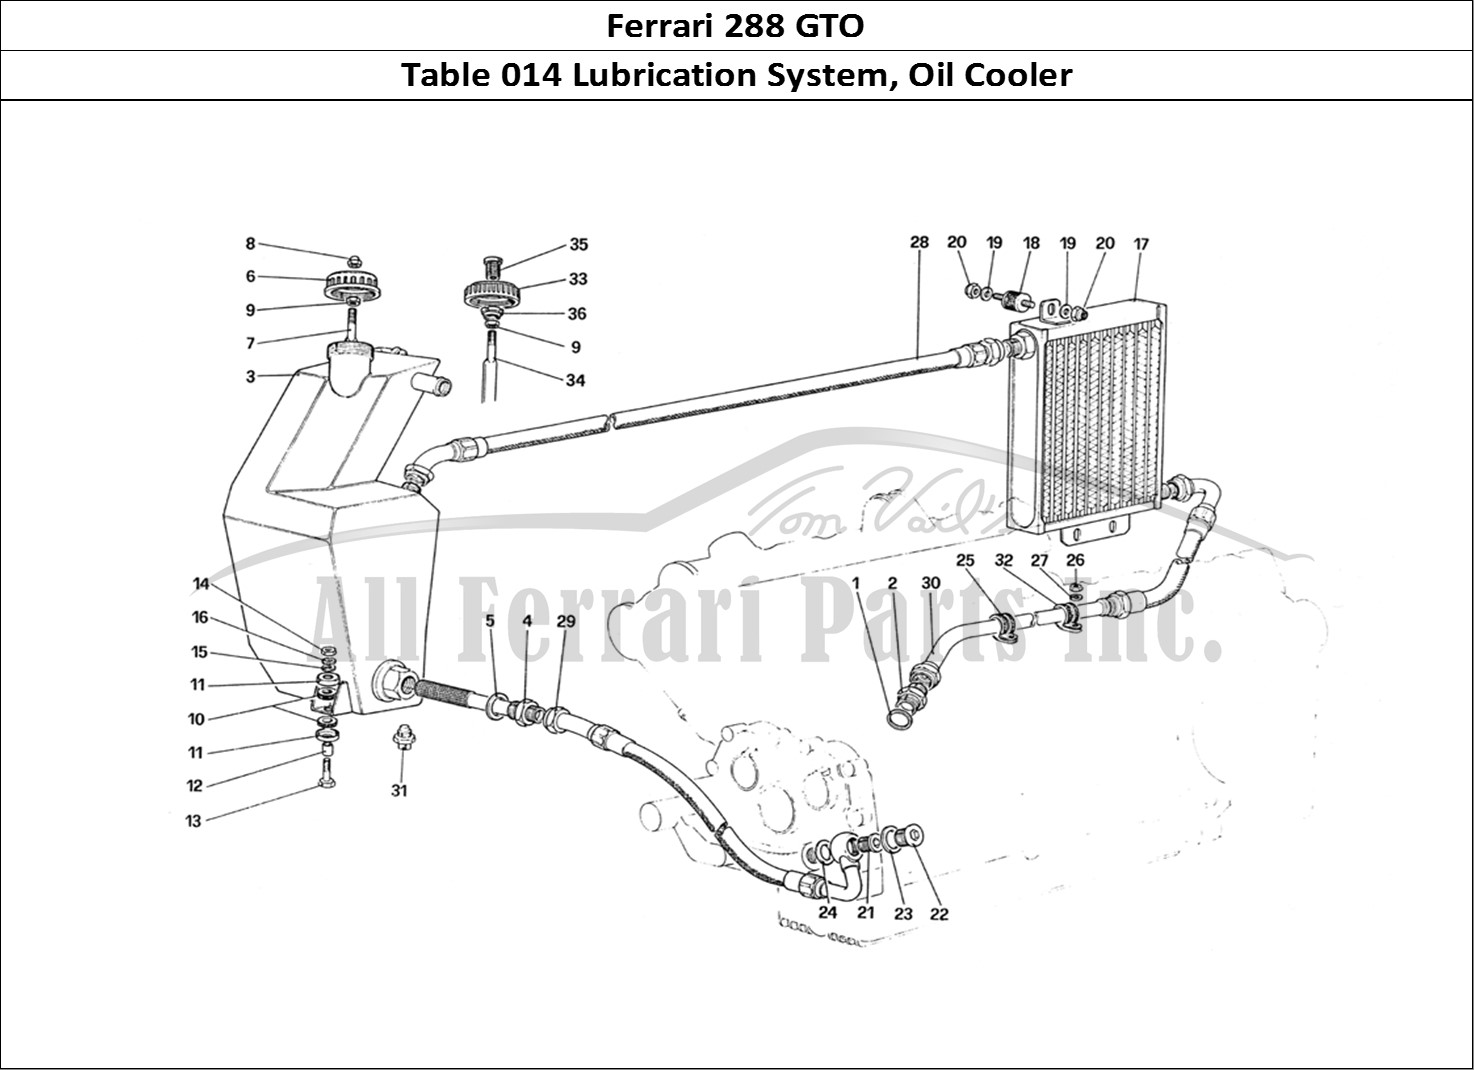 Ferrari Parts Ferrari 288 GTO Page 014 Lubrication System